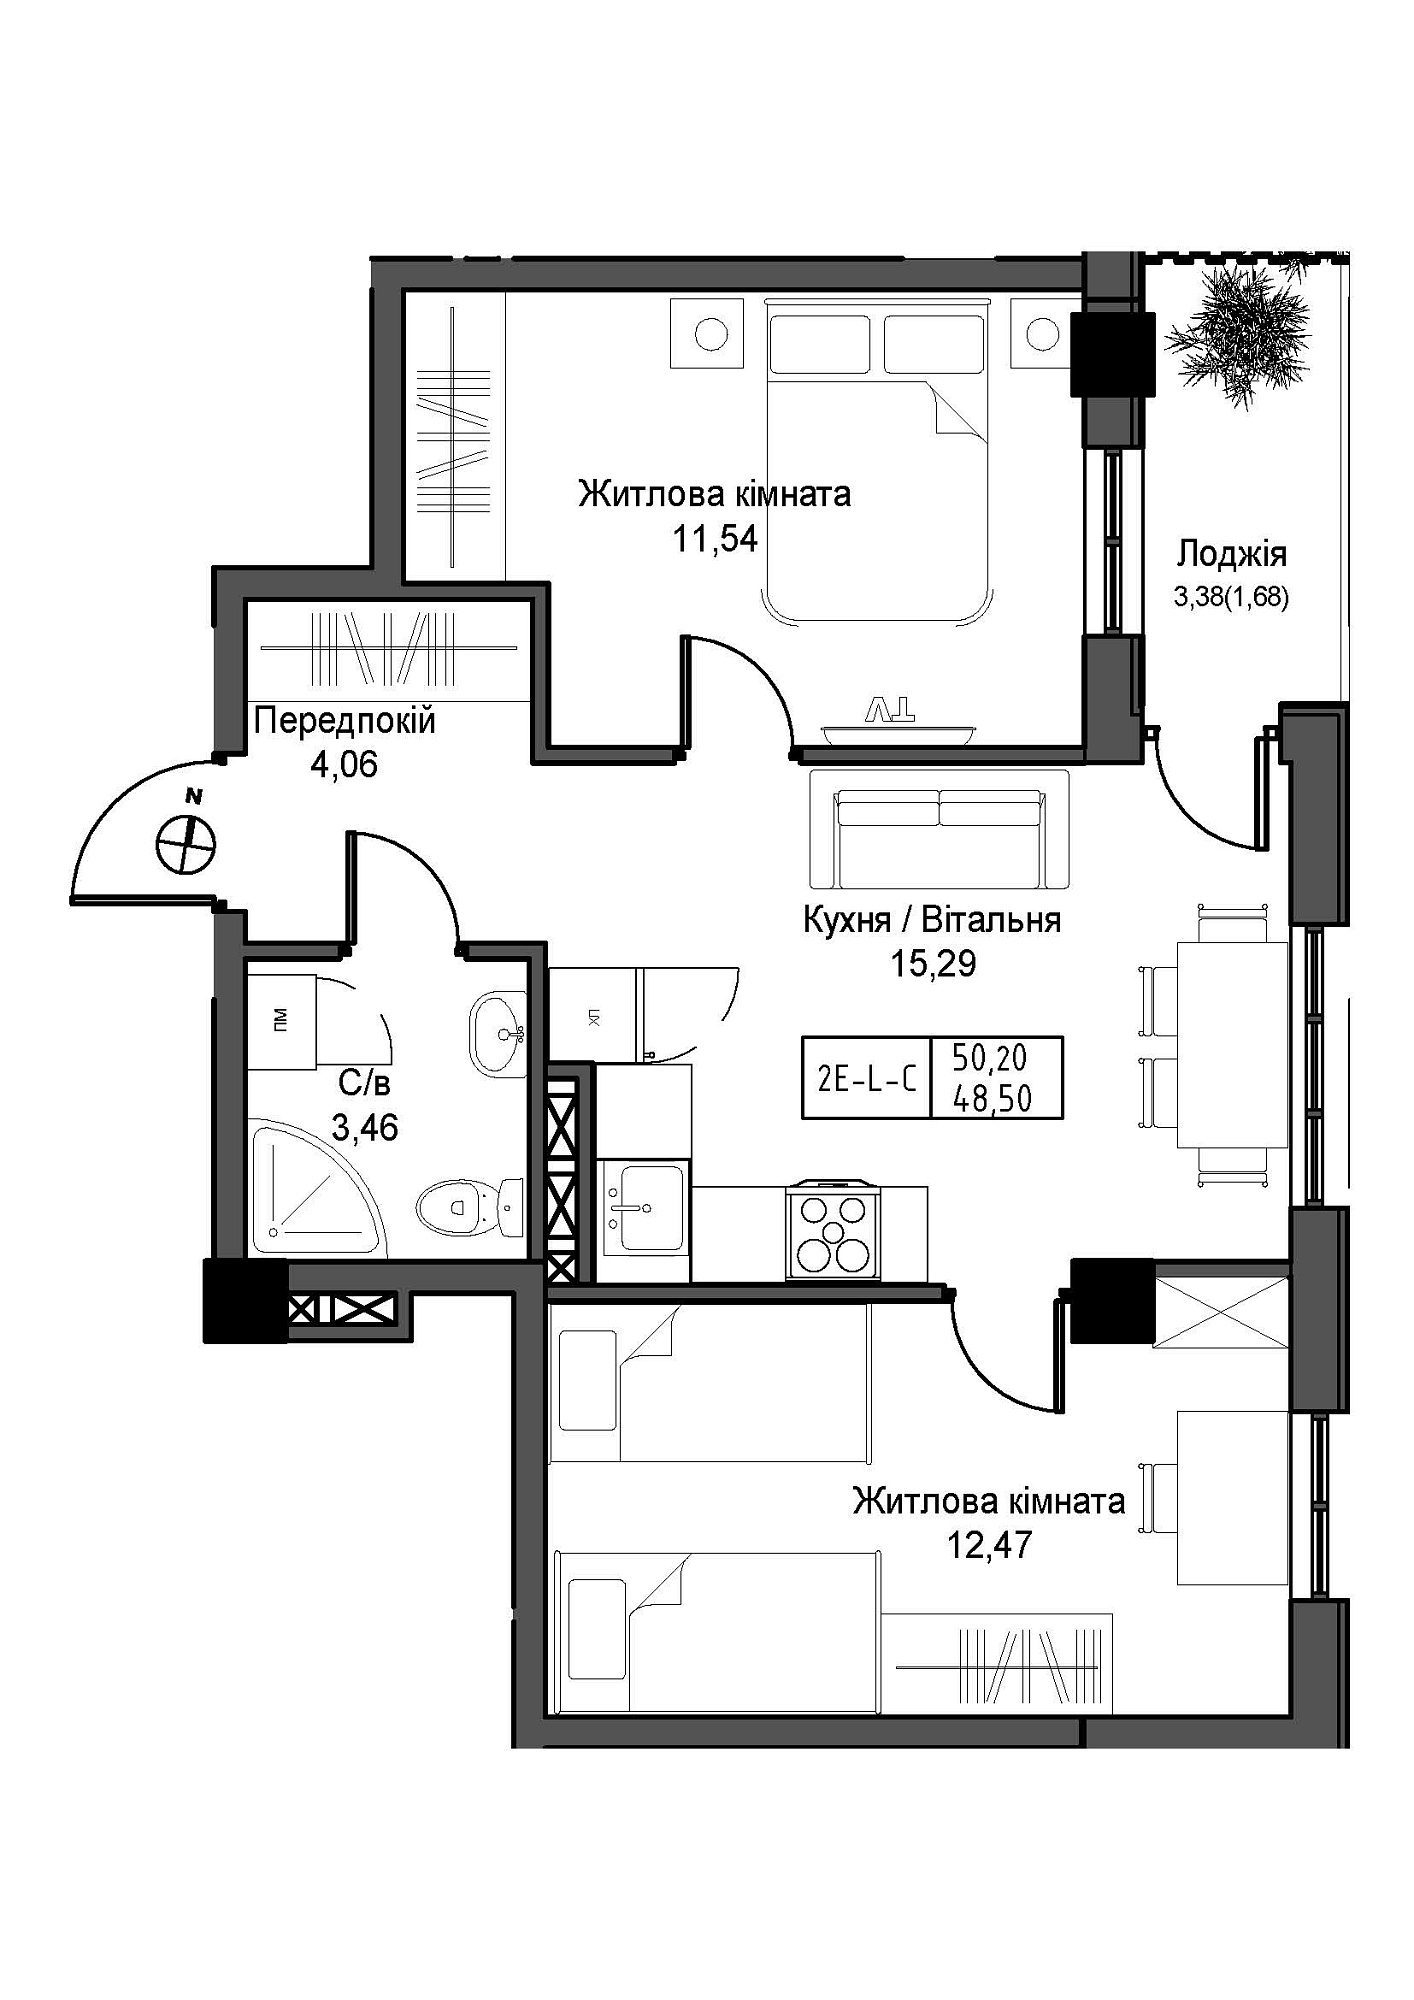 Планування 2-к квартира площею 48.5м2, UM-007-04/0007.